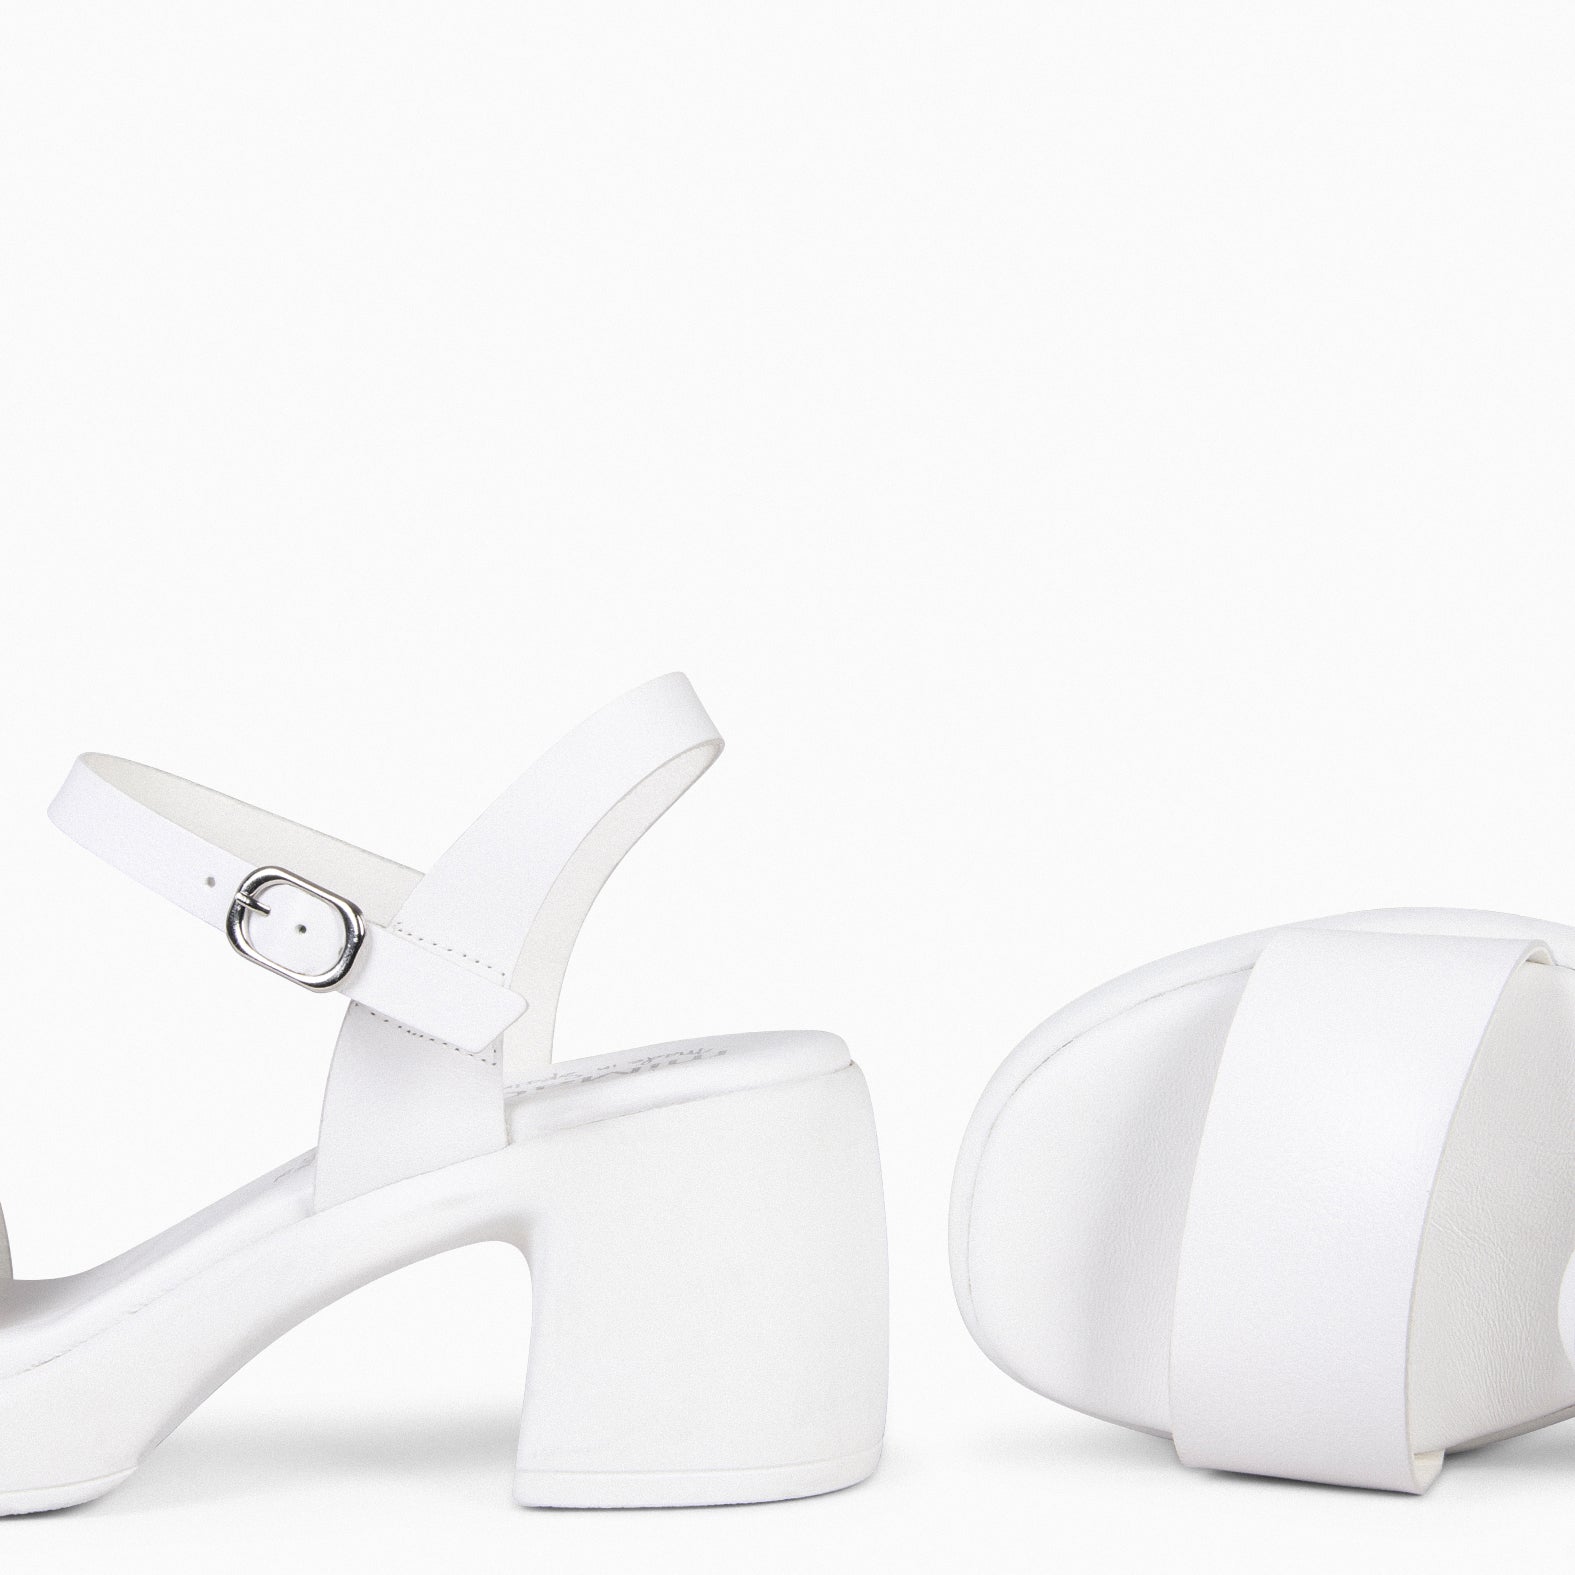 CRIS – WHITE Sandal with block platform